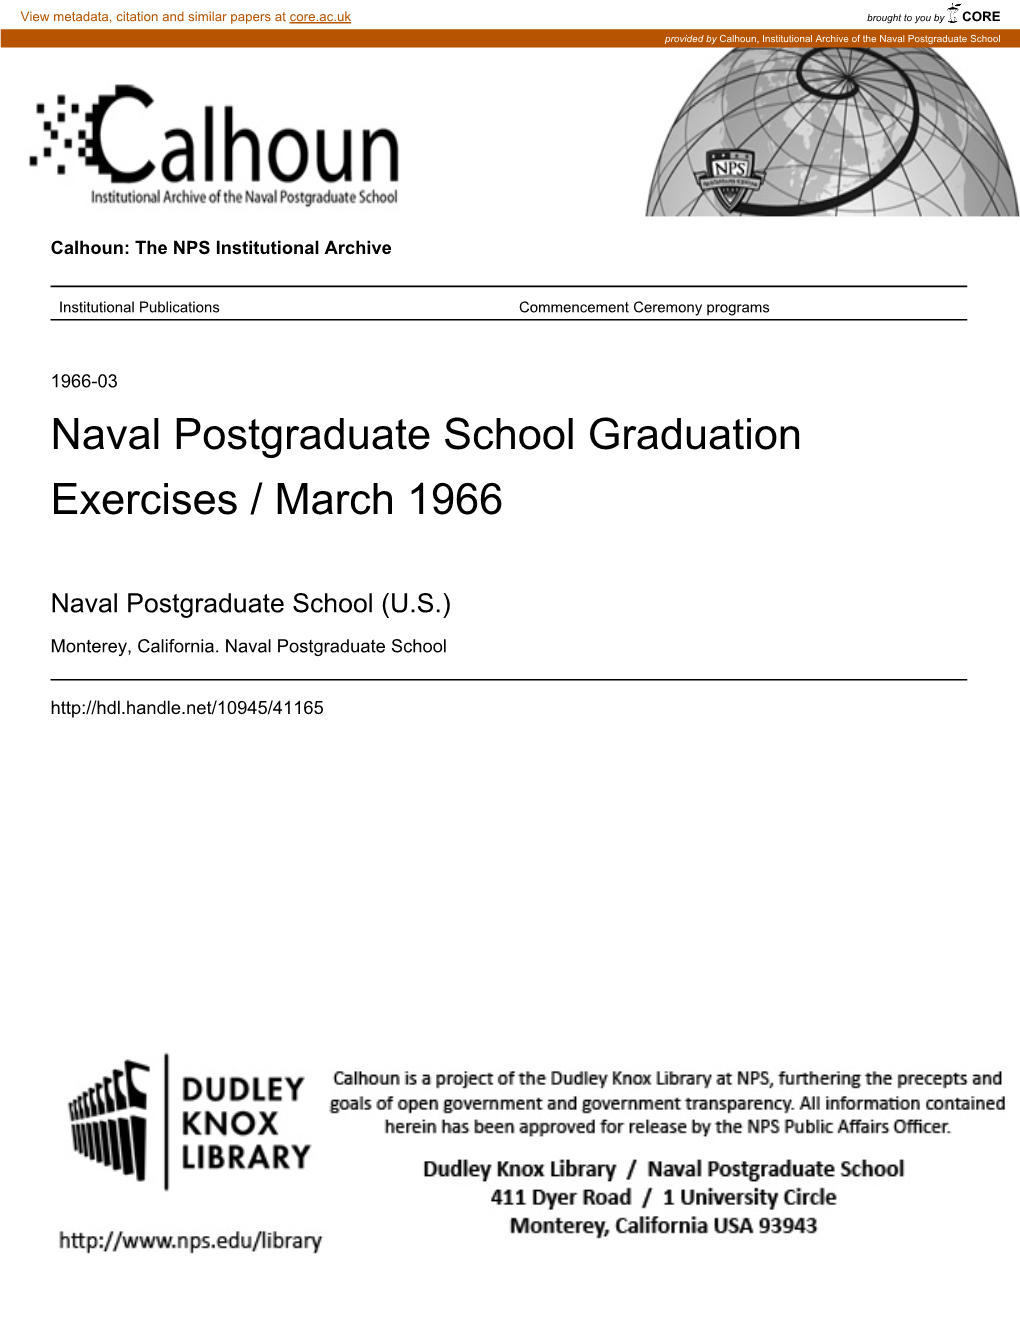 Naval Postgraduate School Graduation Exercises / March 1966